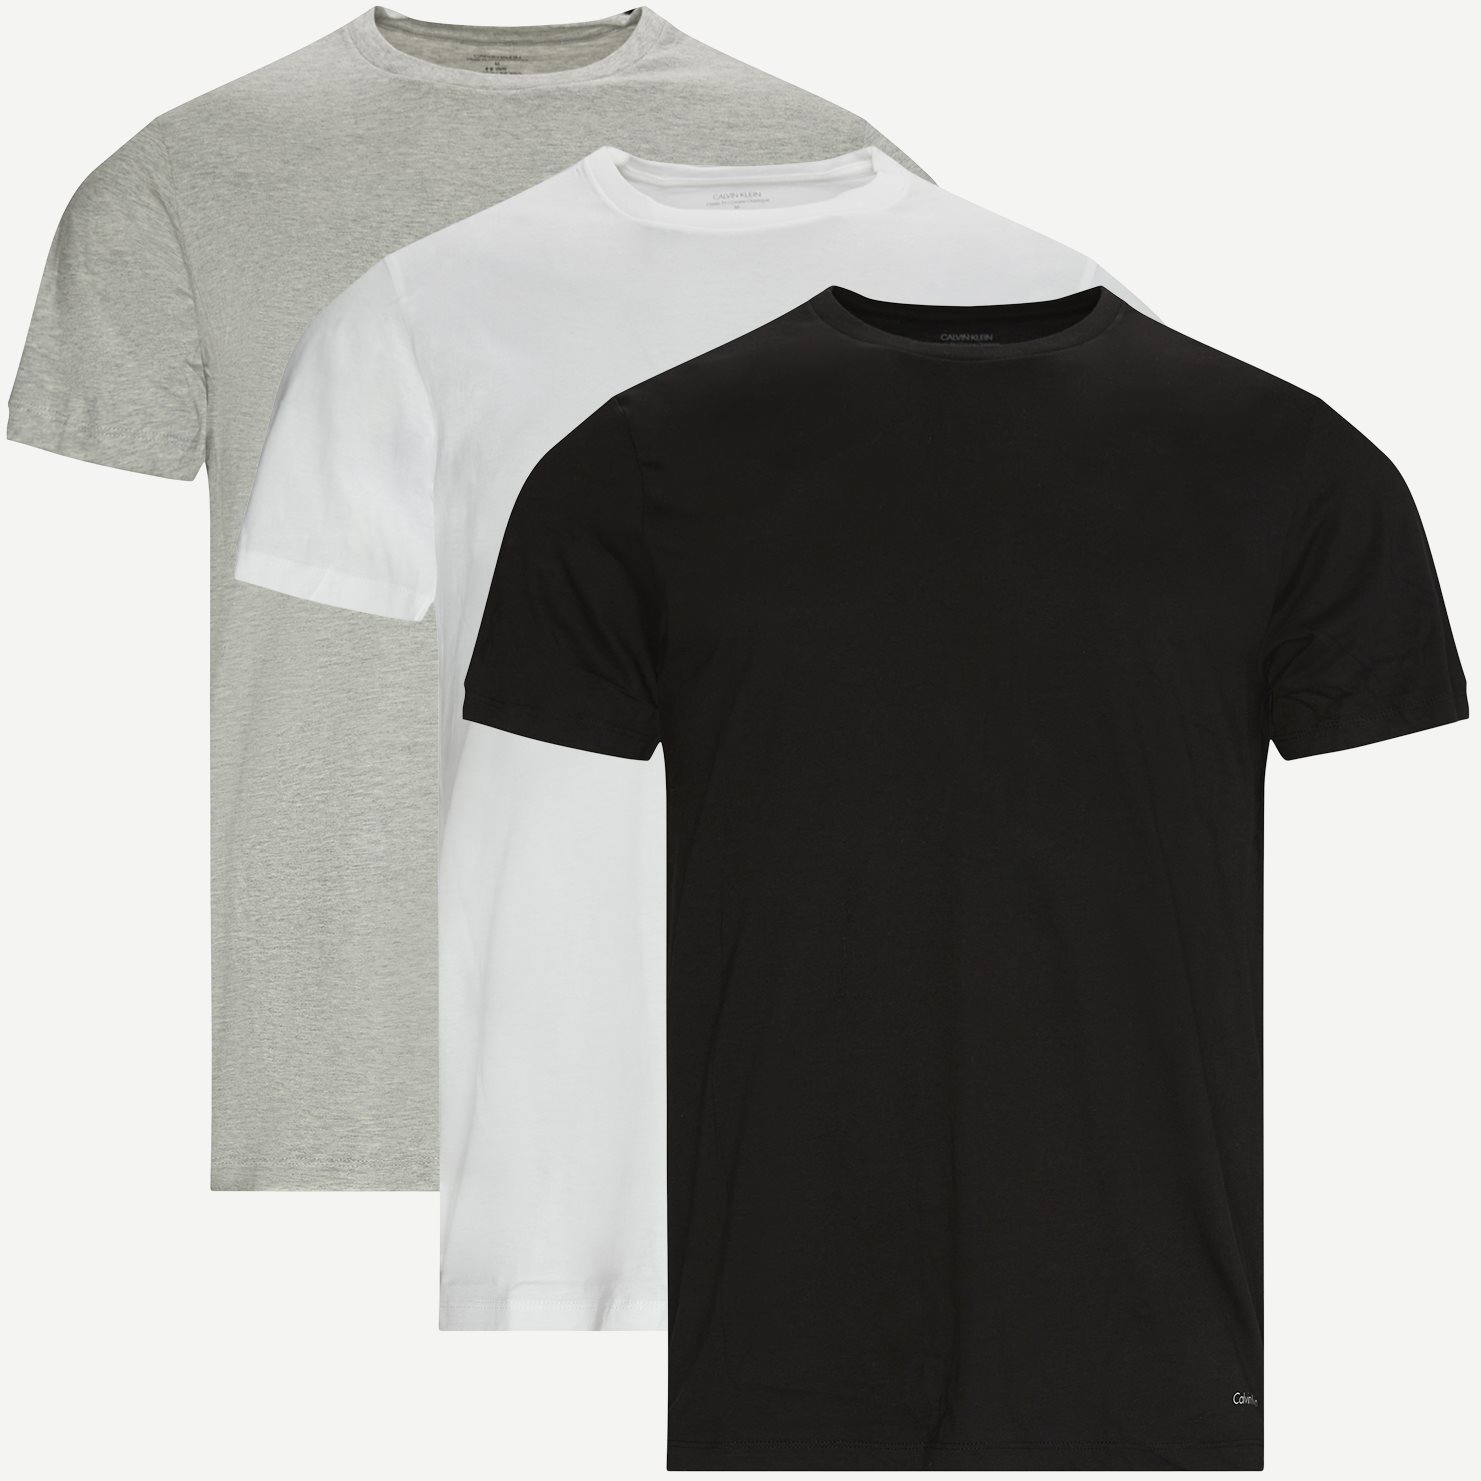 3-Pack Crewneck T-Shirts - T-shirts - Classic fit - Multi